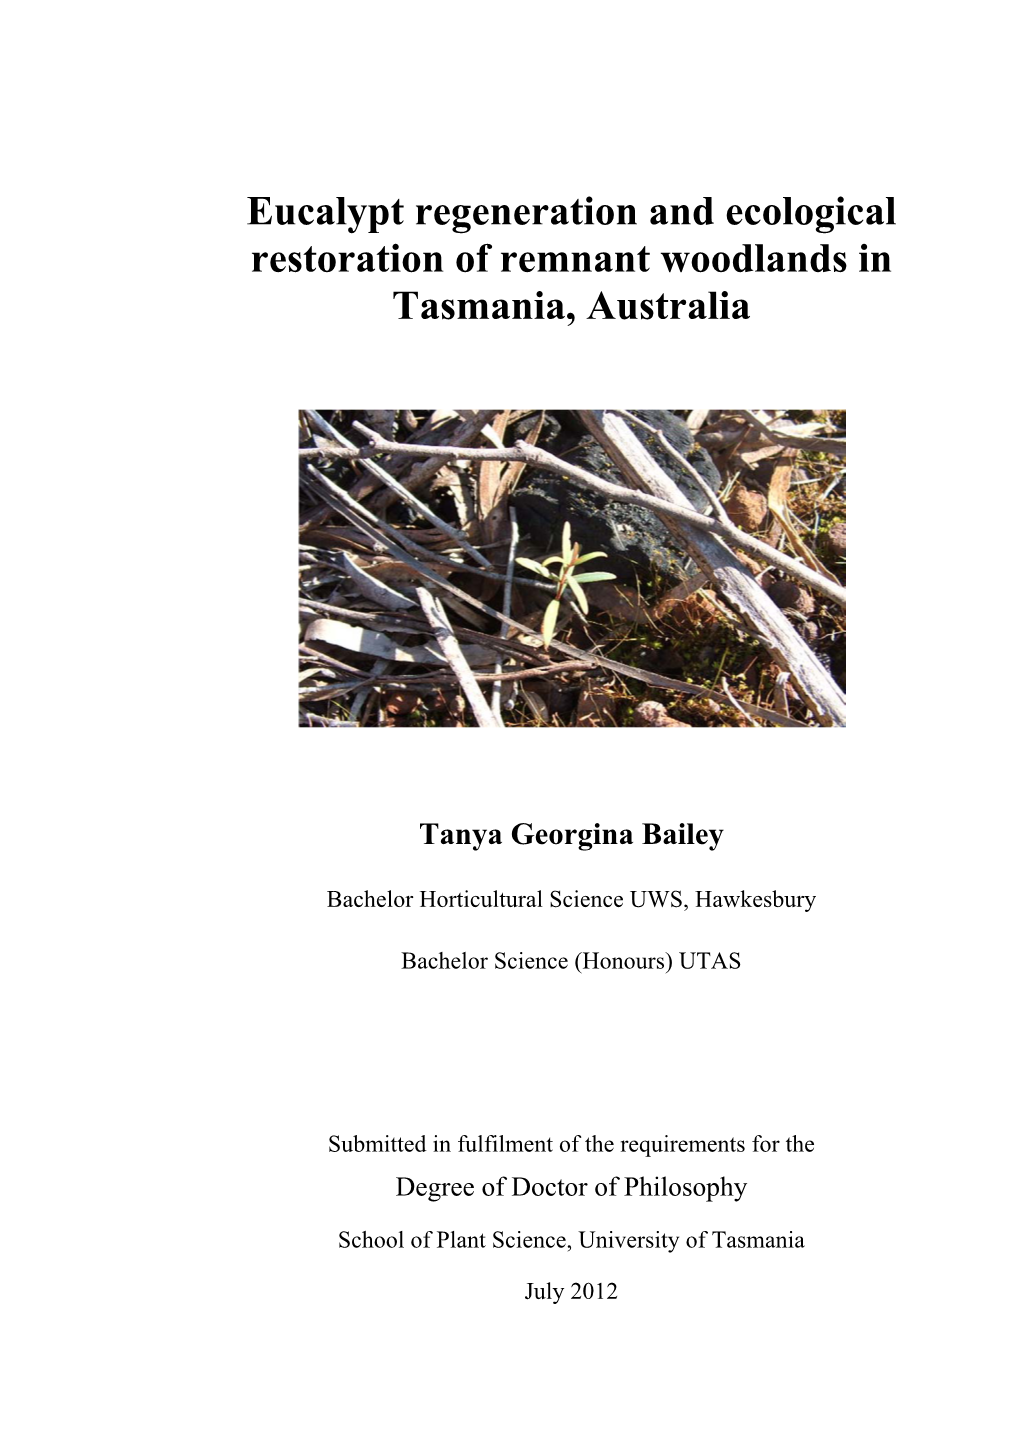 Eucalypt Regeneration and Ecological Restoration of Remnant Woodlands in Tasmania, Australia